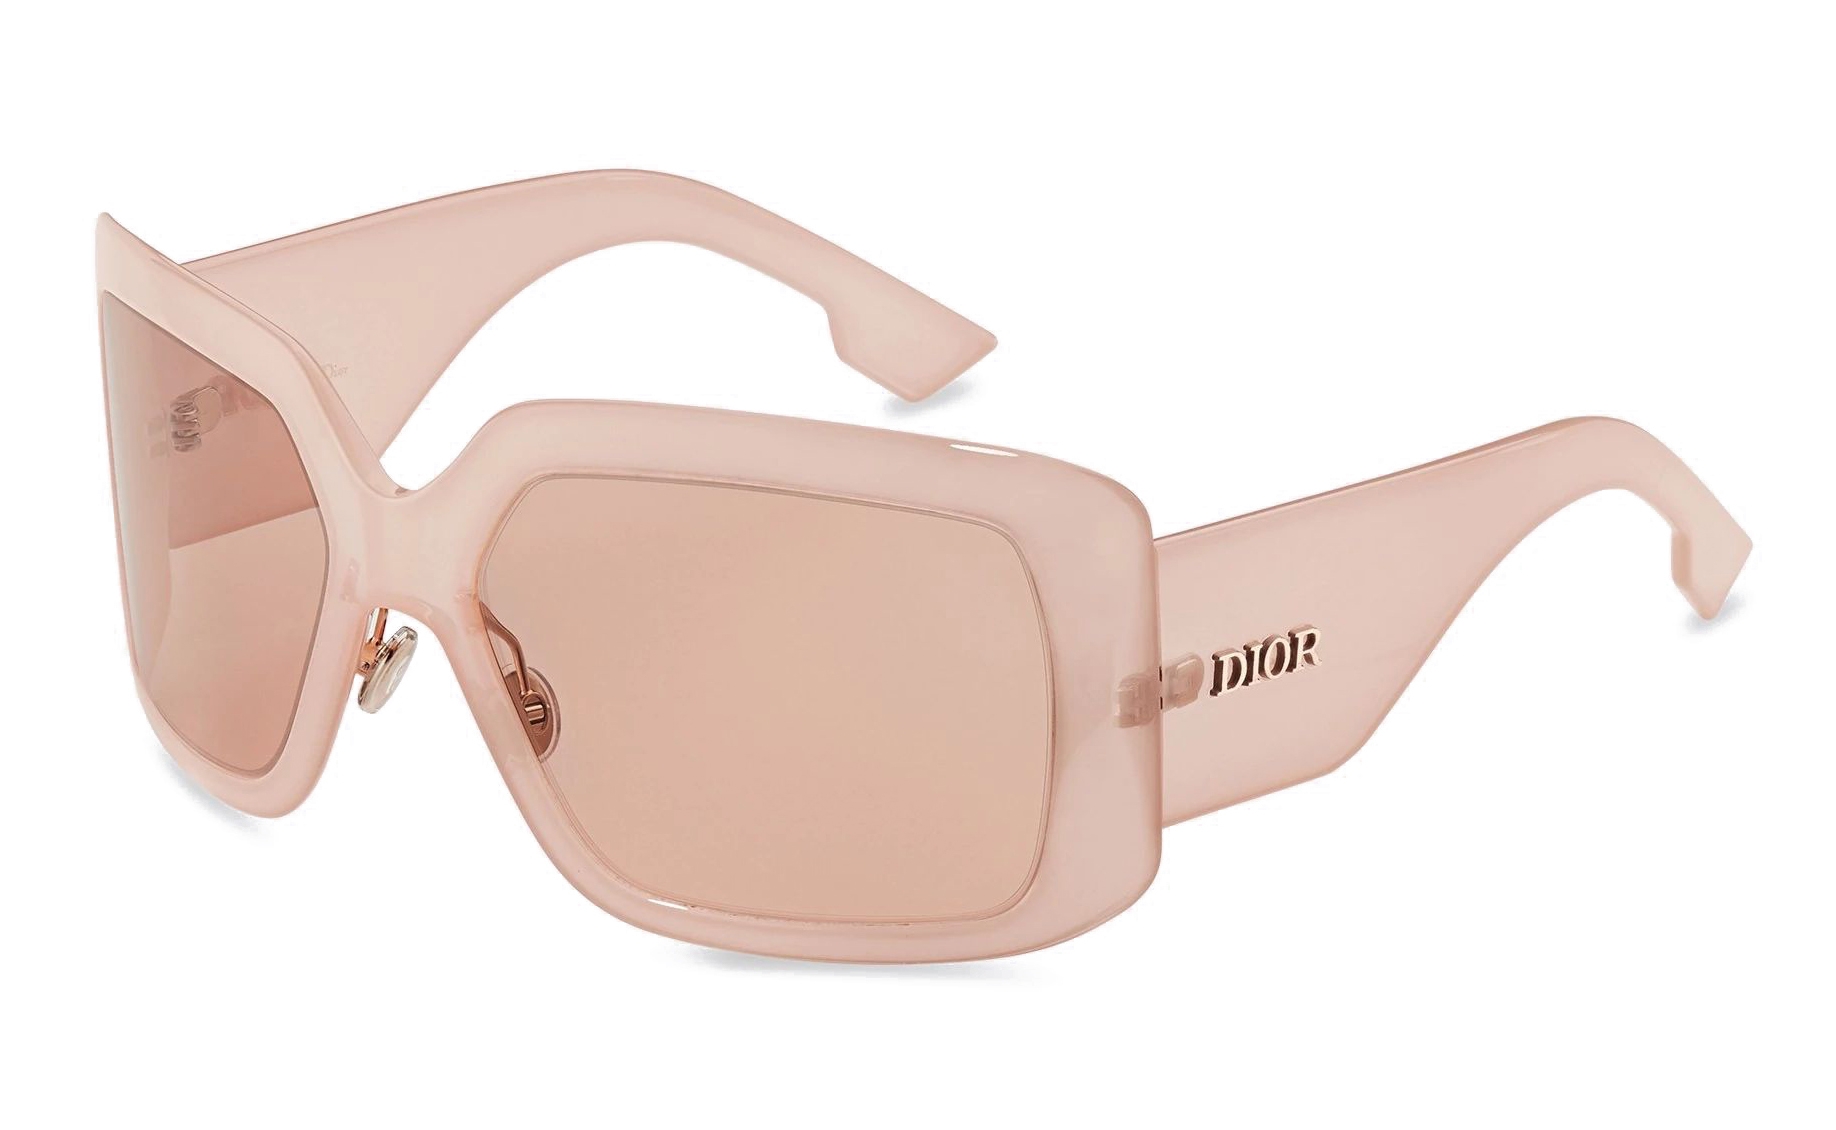 Christian Dior Revolution 2 Sunglasses